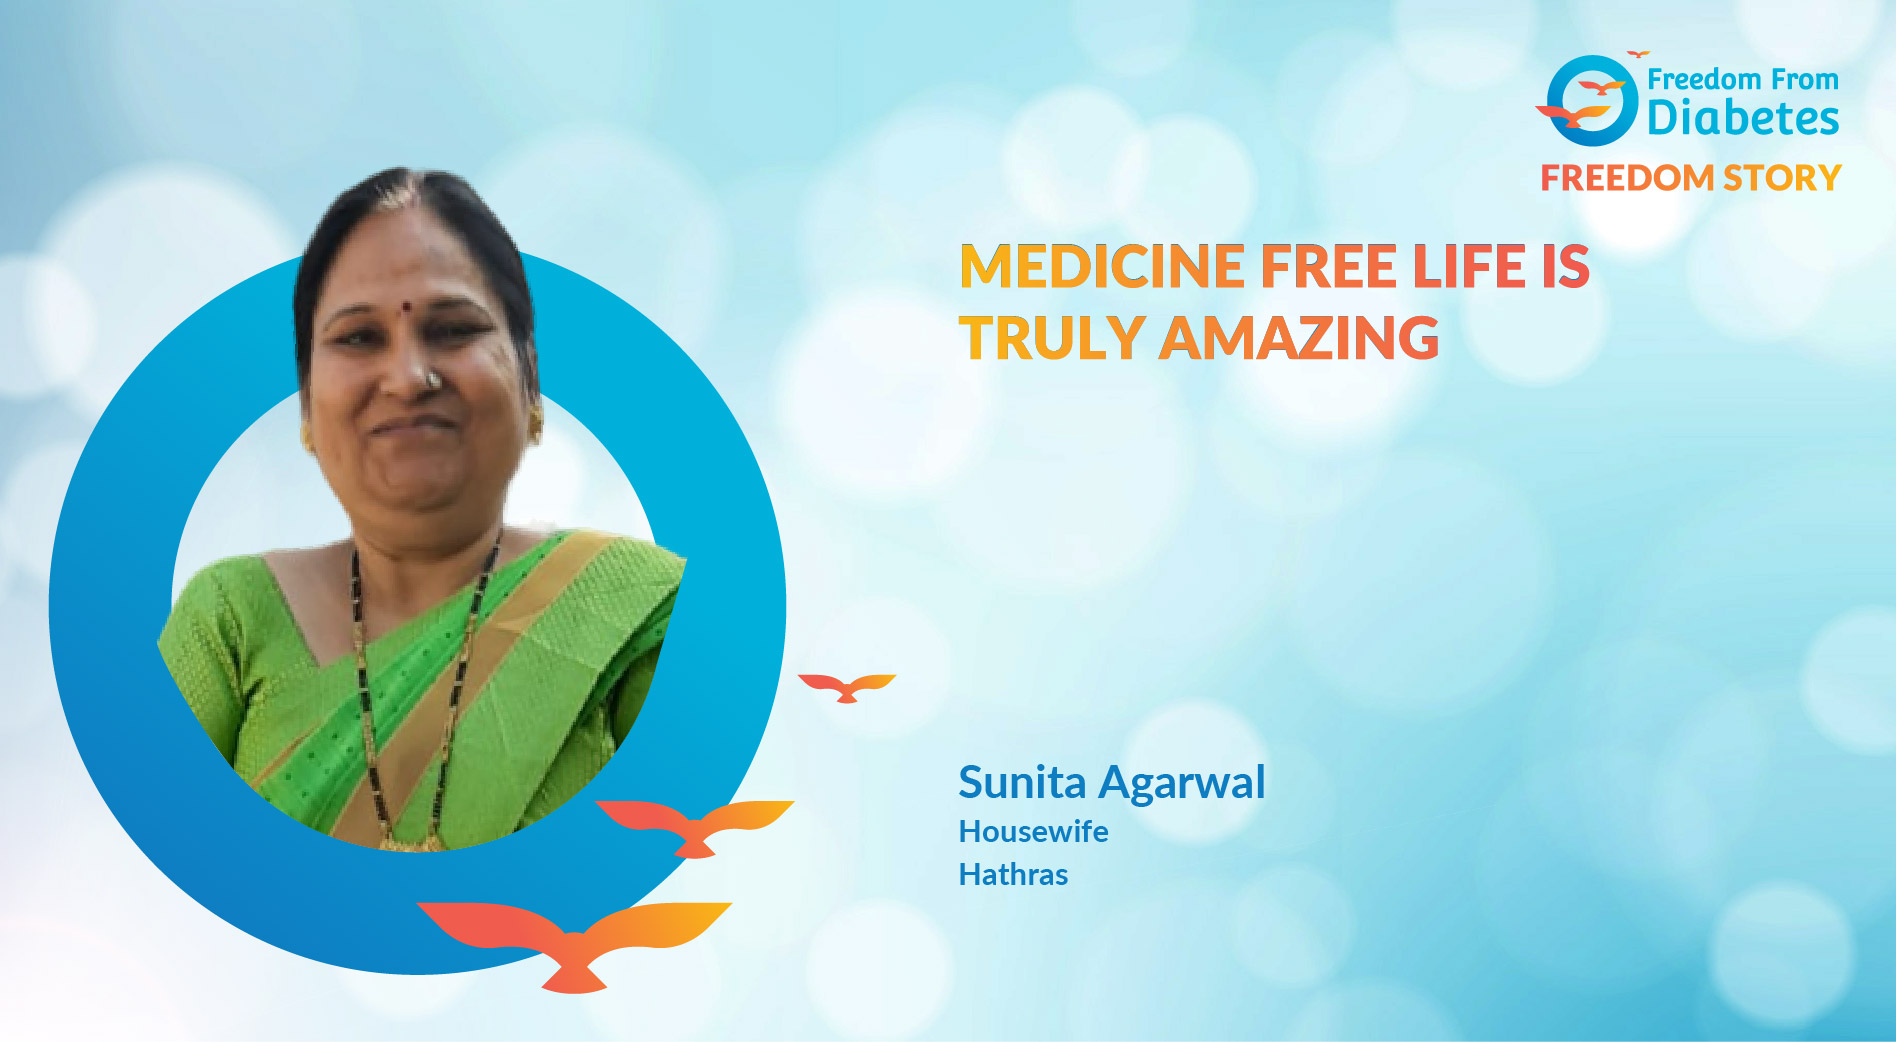 Sunita Agarwal: A diabetes reversal success story from Hathras